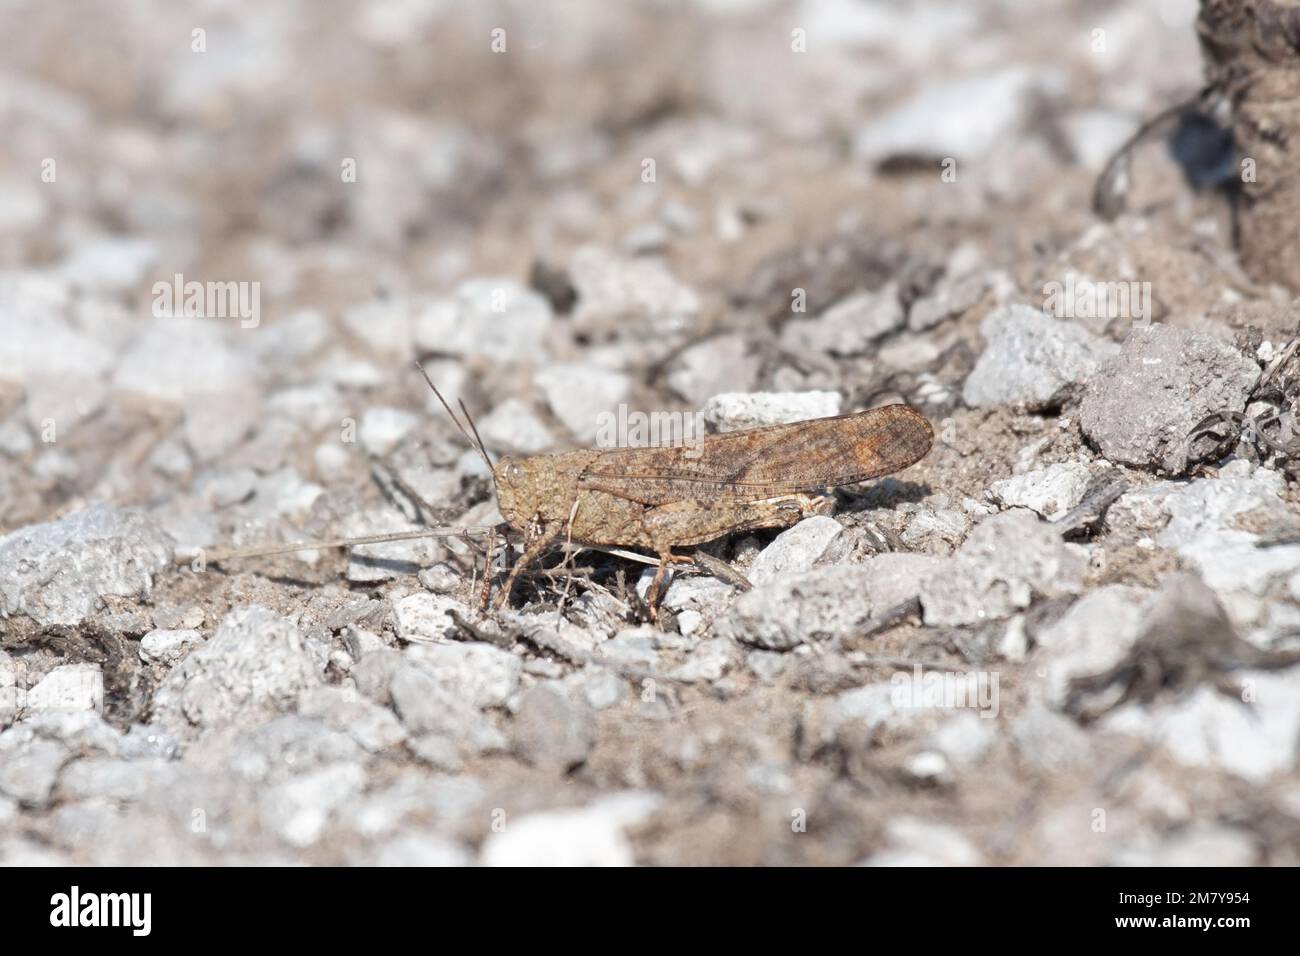 A specked-winged grasshopper is nearly hidden as it walks across a limestone path Stock Photo